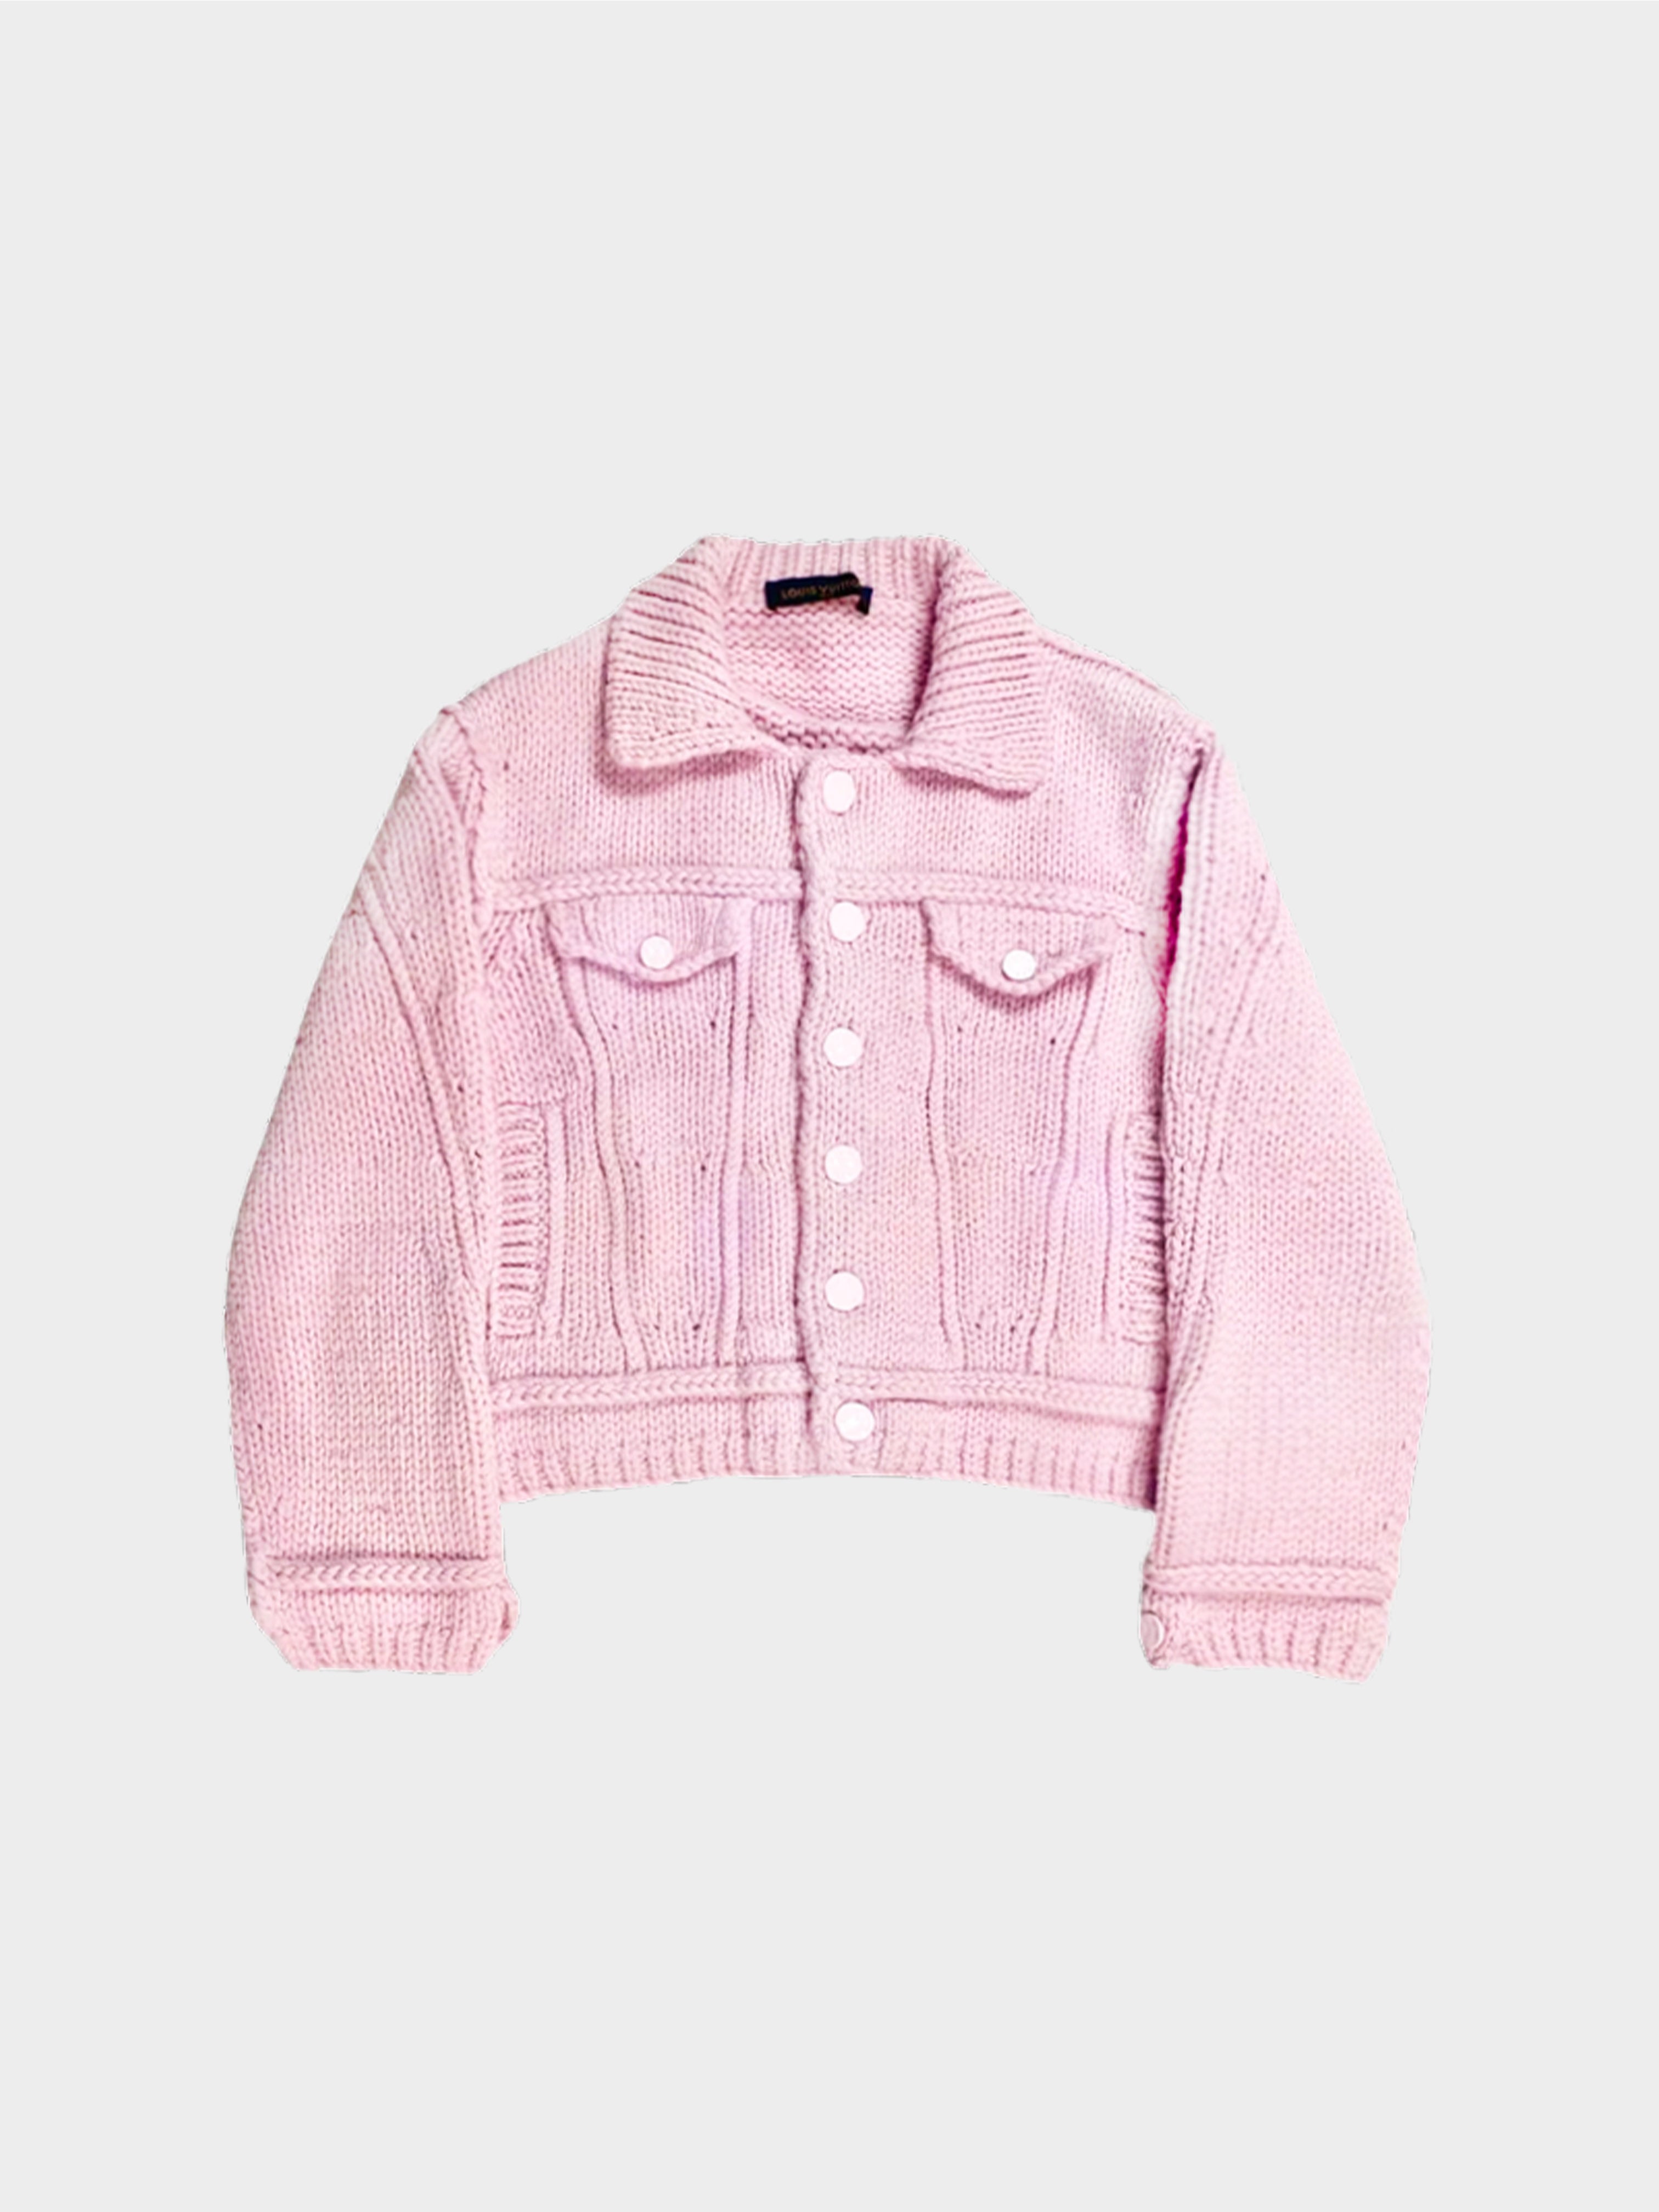 Louis Vuitton chunky knit trucker jackets (2020)